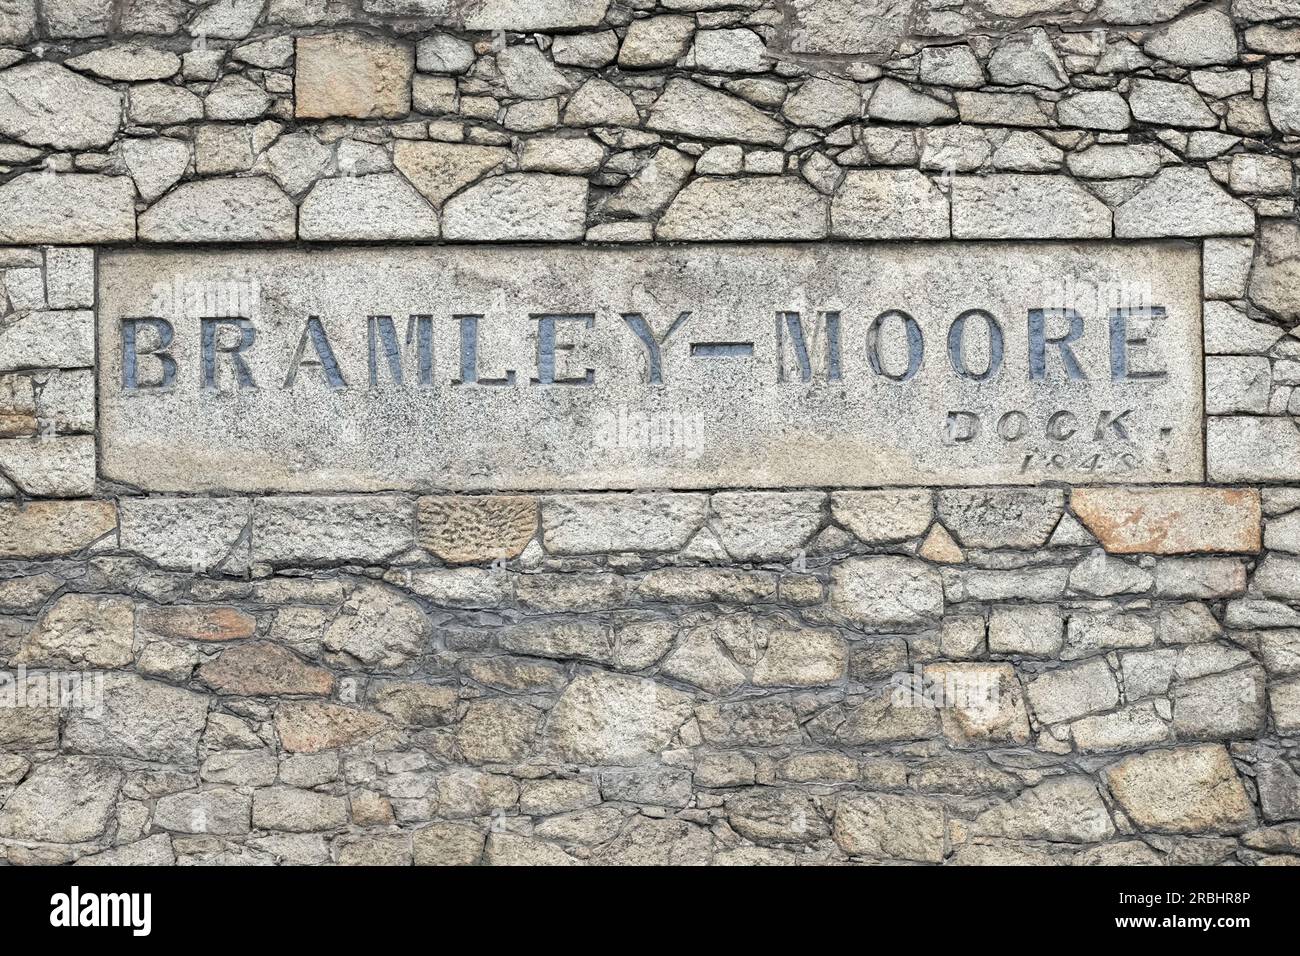 Bramley Moore Dock. Liverpool Stock Photo